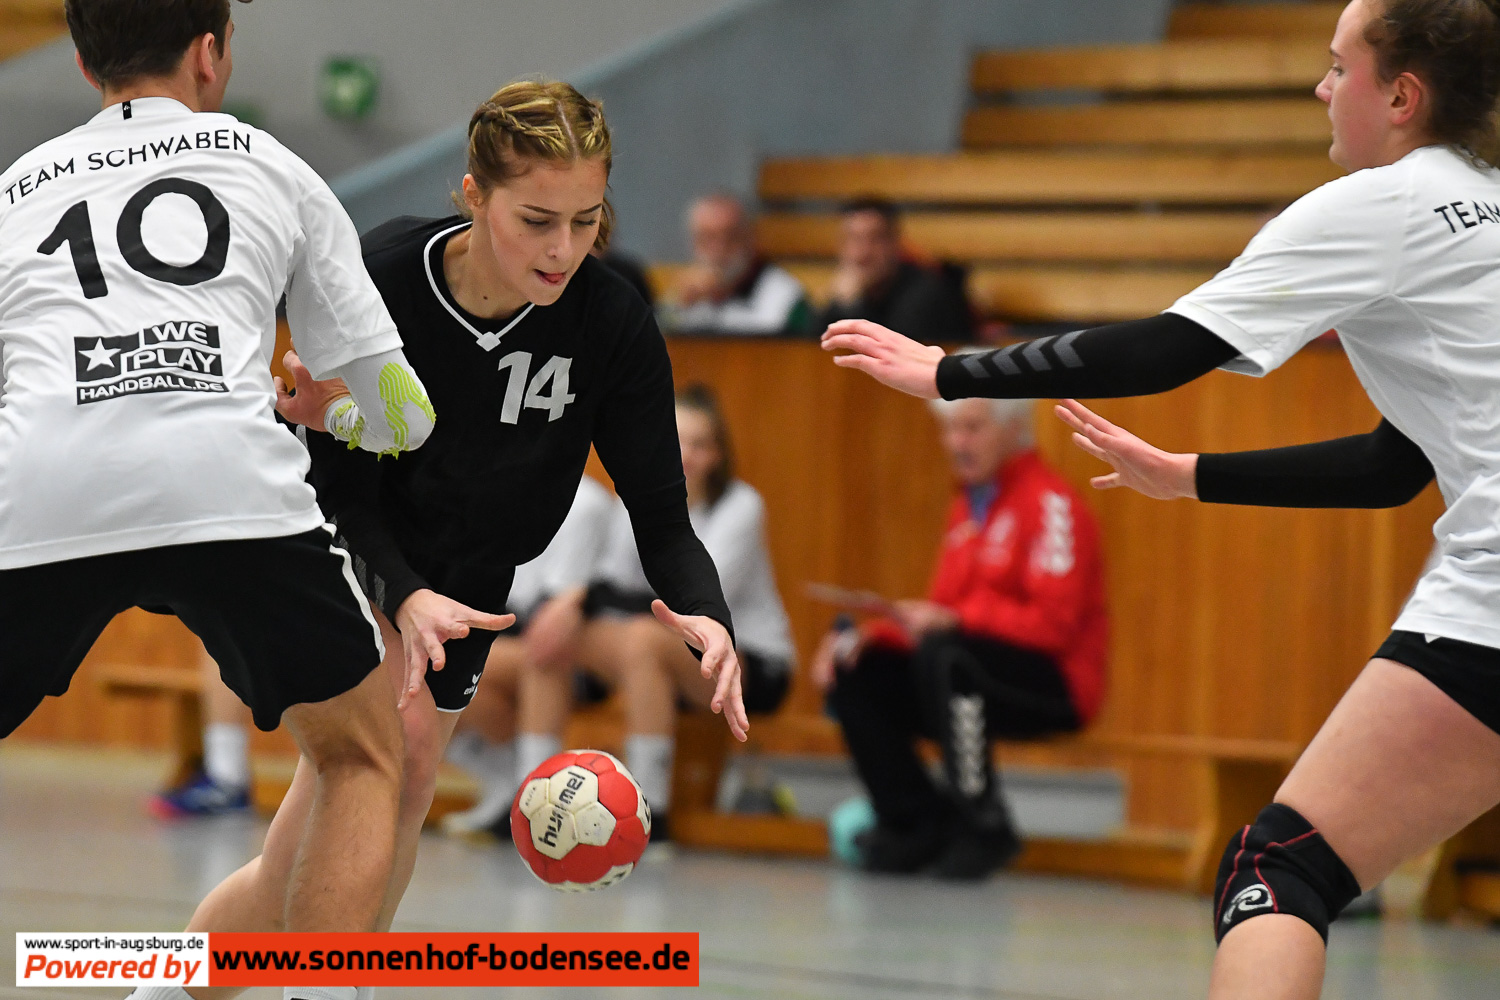 Handball-bezirk-schwaben-auswahl  3945